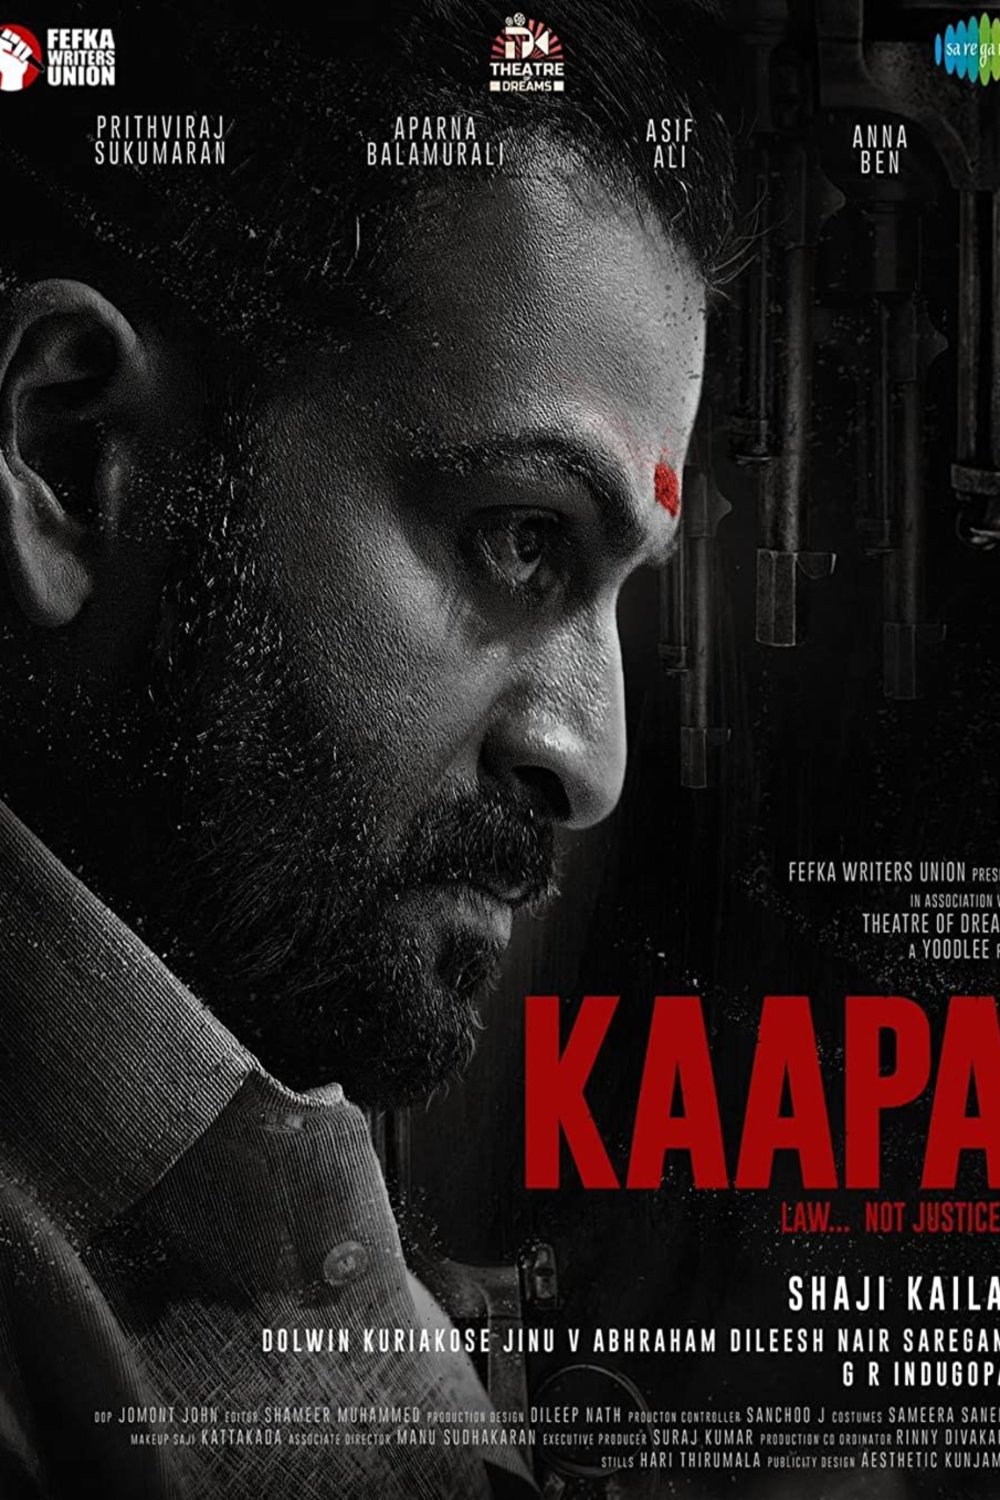 Malayalam poster of the movie Kaapa